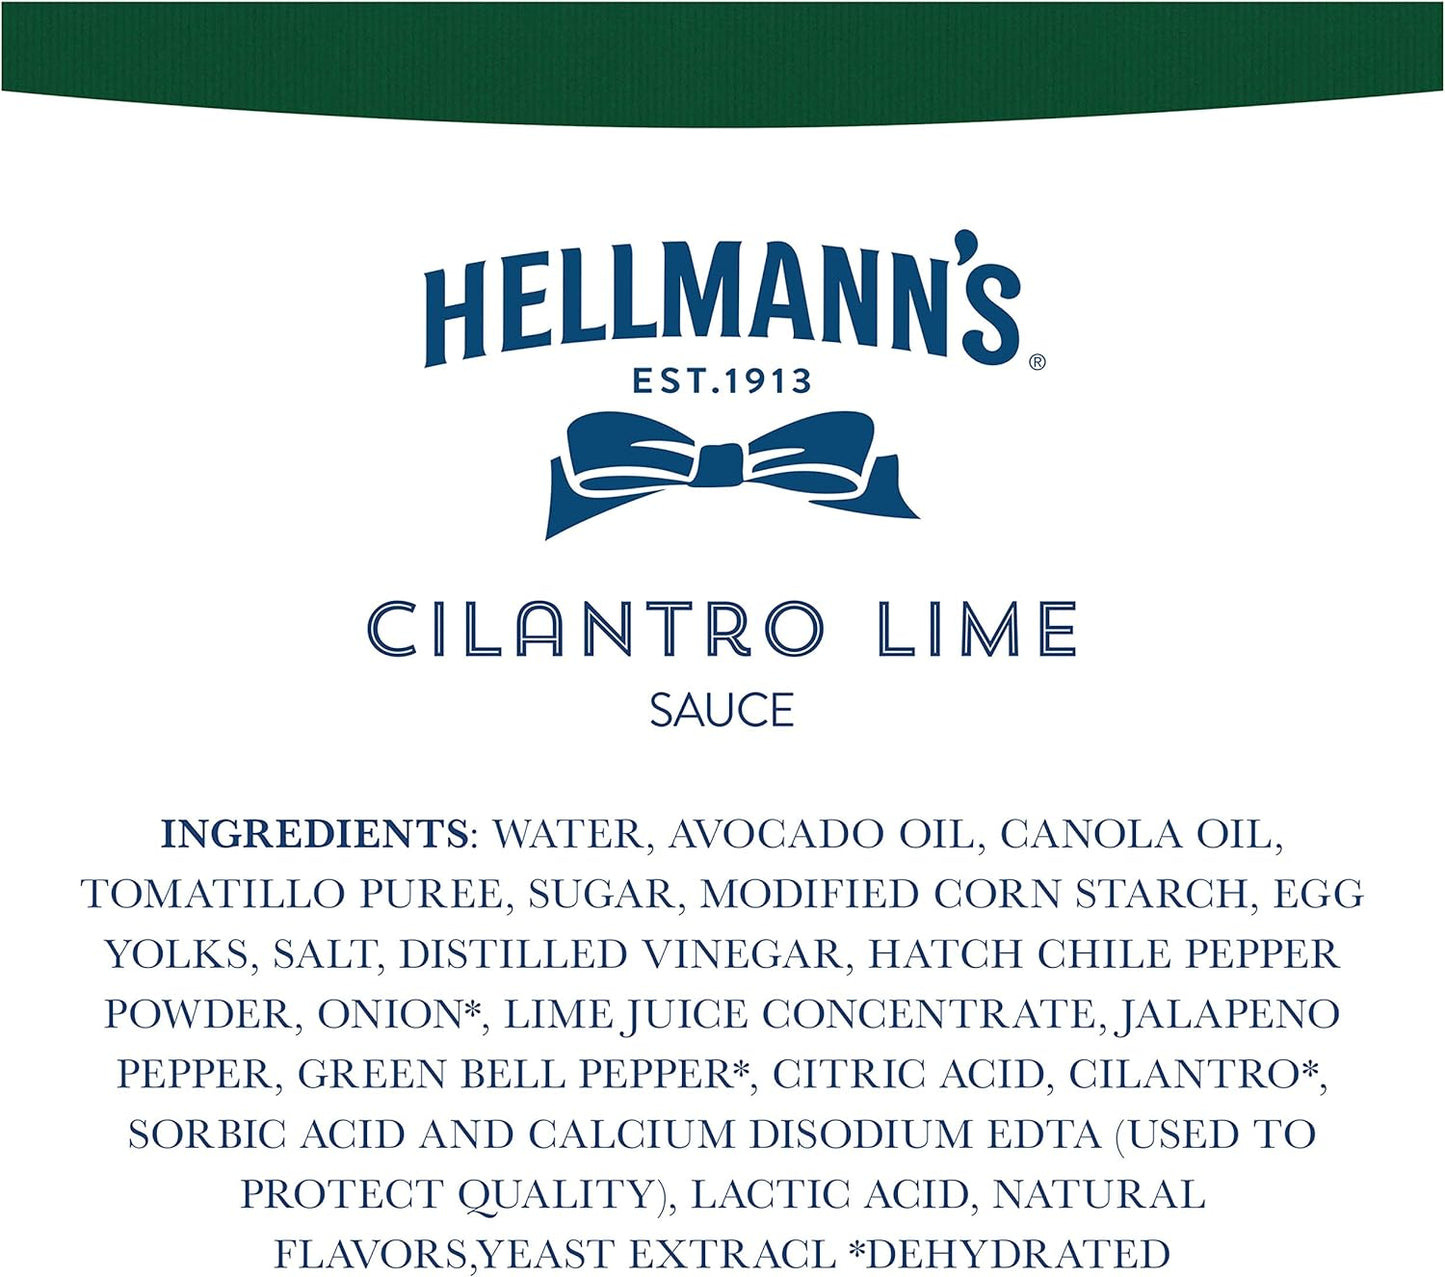 Hellmann's Sauce Cilantro Lime 9 oz